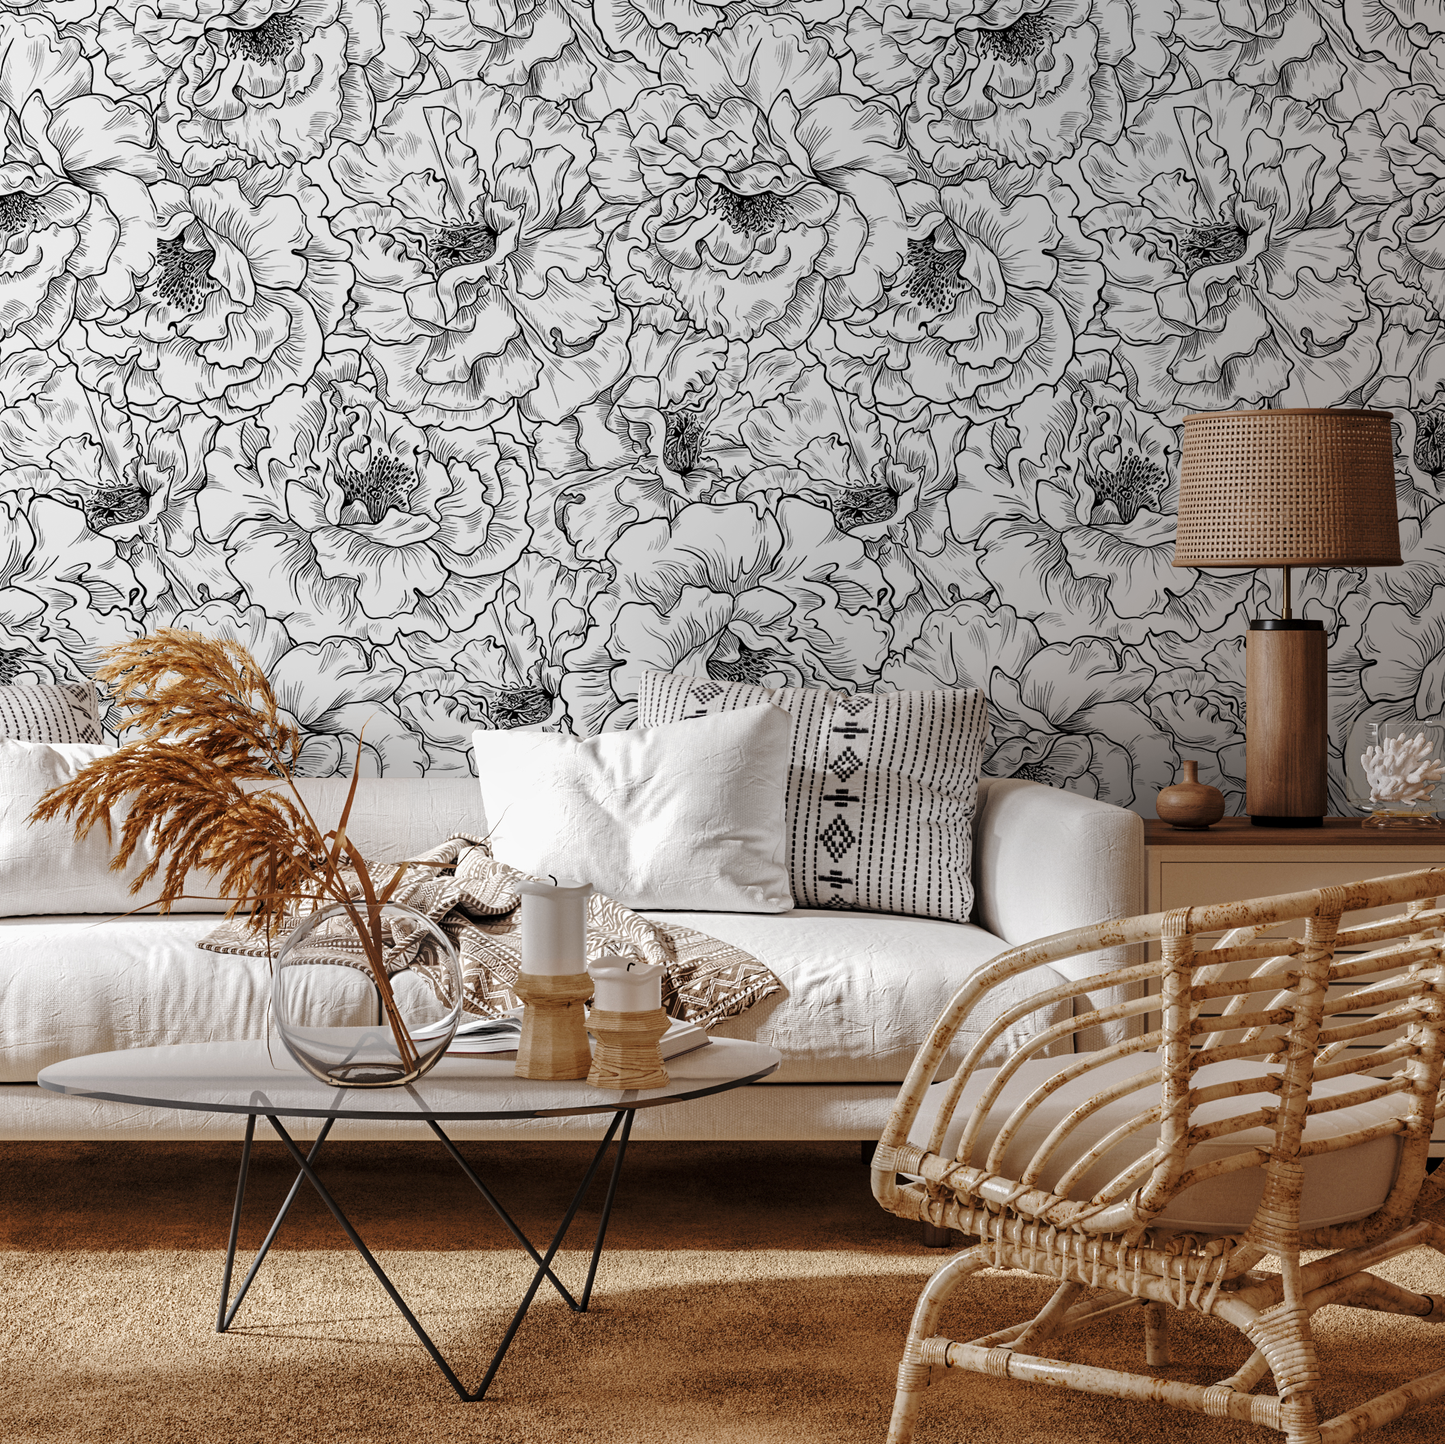 Removable Wallpaper, Scandinavian Wallpaper, Handrawn Wallpaper, Peel and Stick Wallpaper, Wall Paper, Black And White - A788